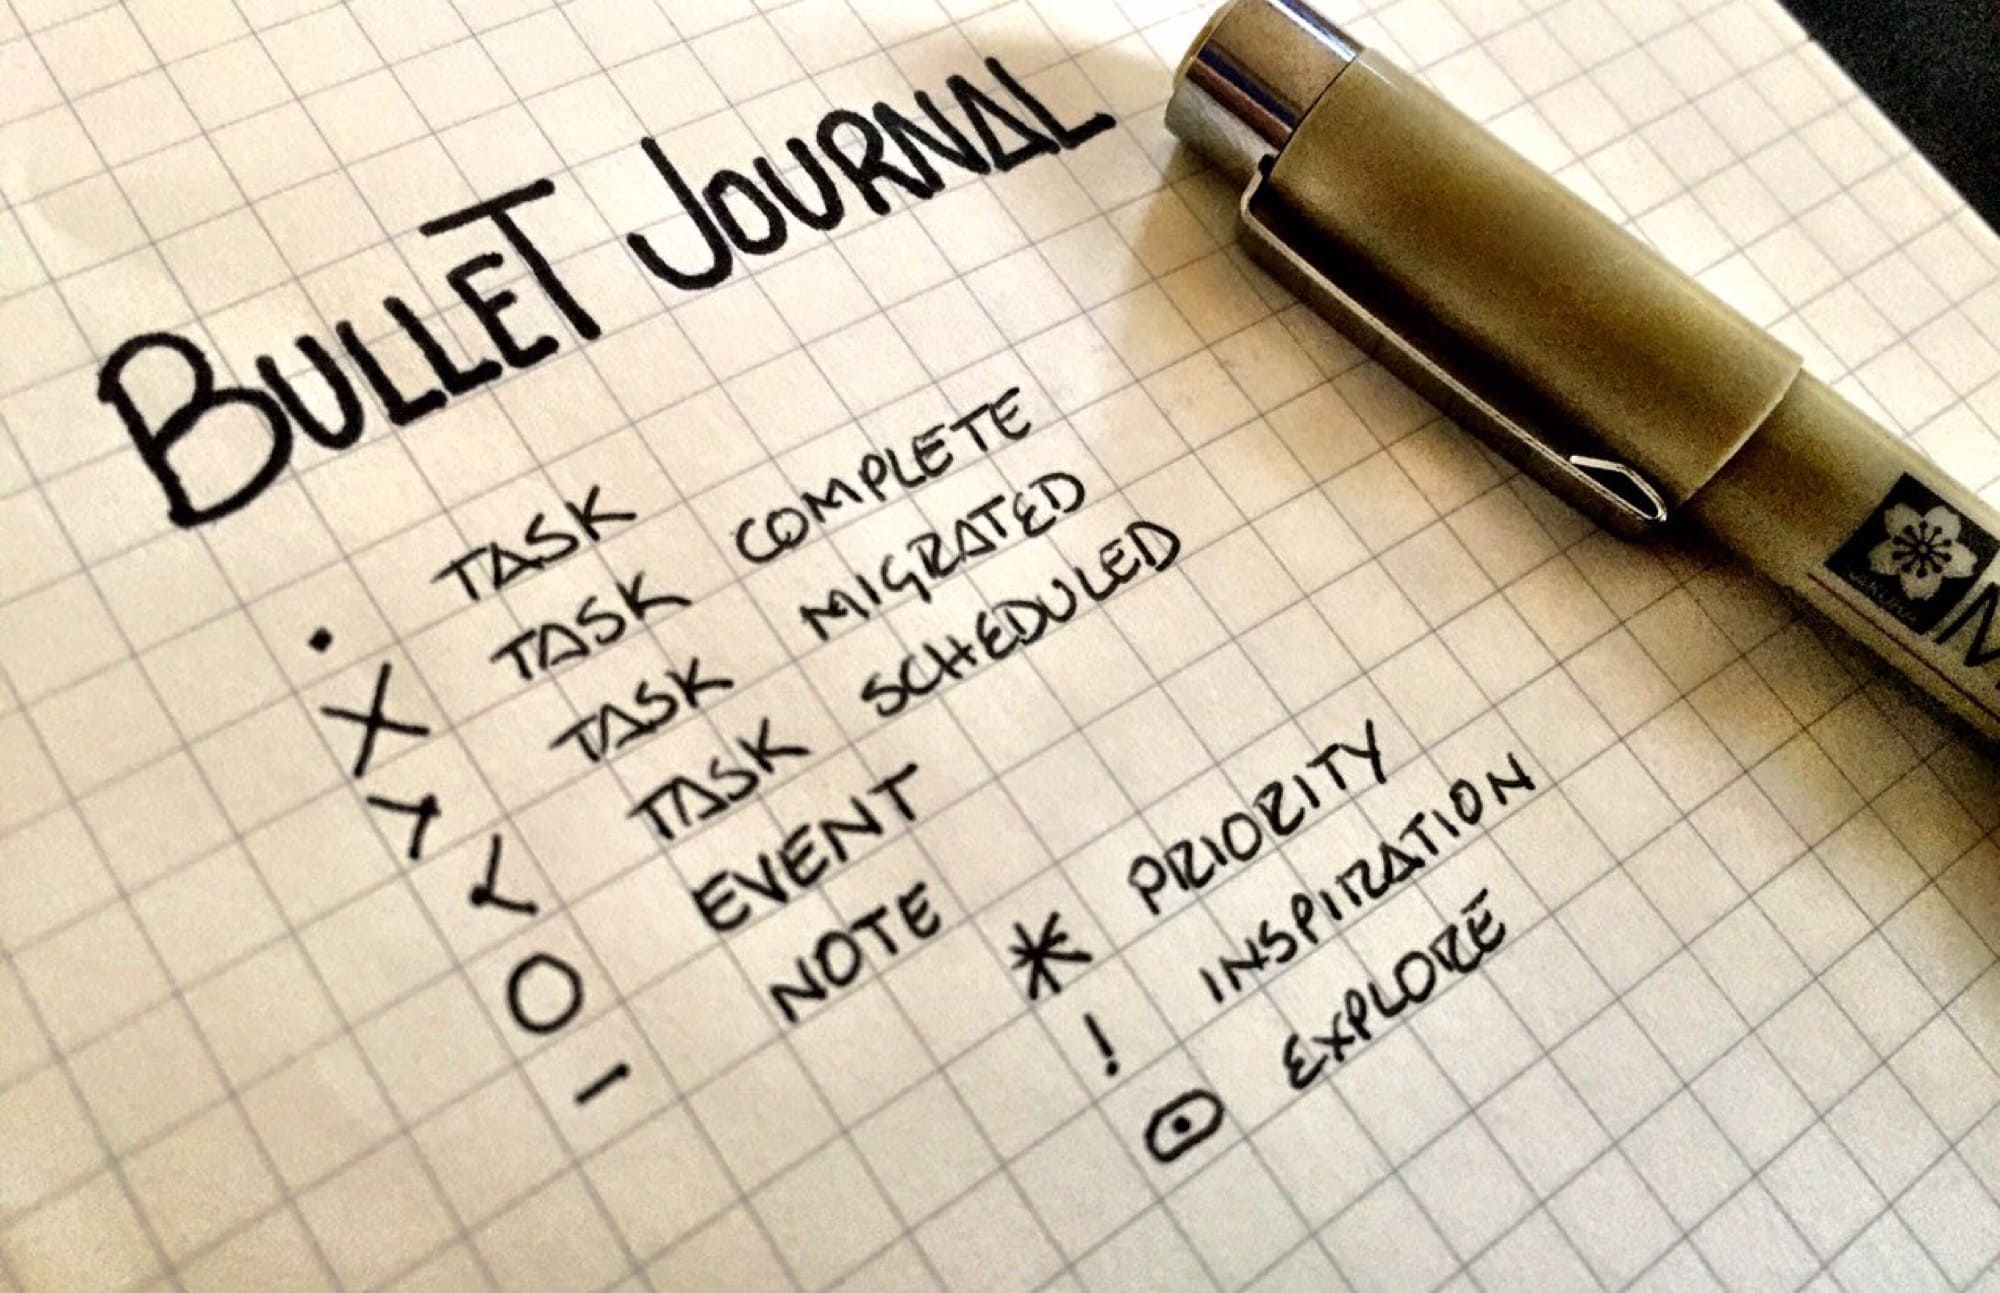 The bullets in Bullet Journal.